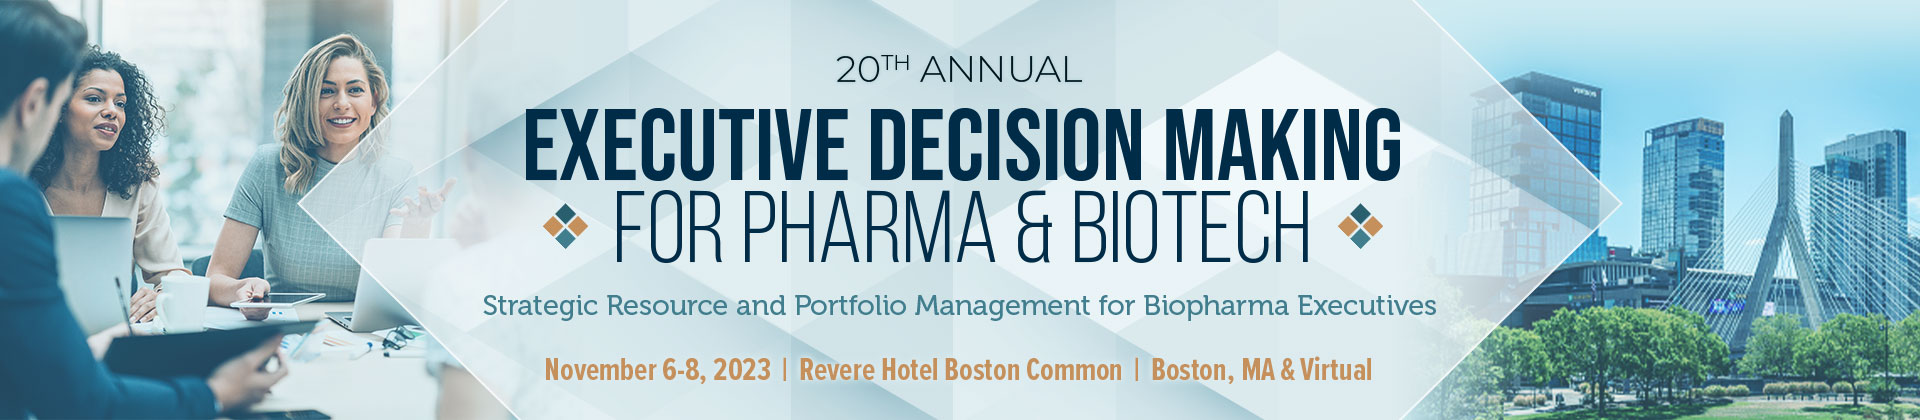 Executive Decision Making For Pharma & Biotech 2023, Boston, Massachusetts, United States